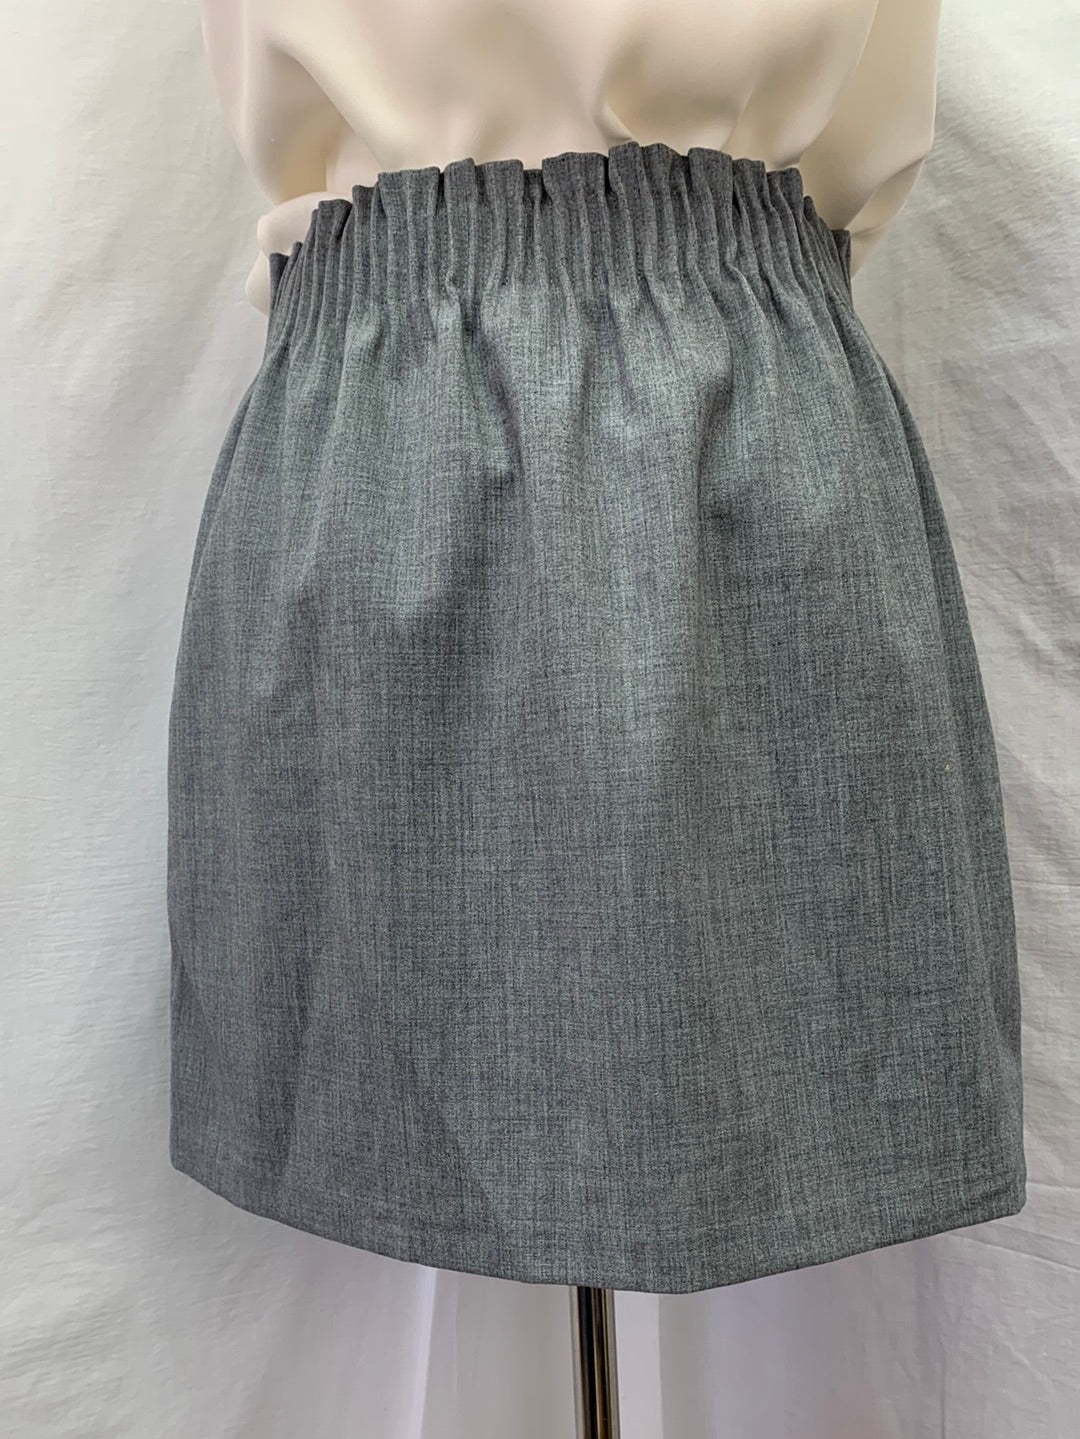 NWT - J. CREW MERCANTILE gray Side Pockets Pull On Skirt - 4